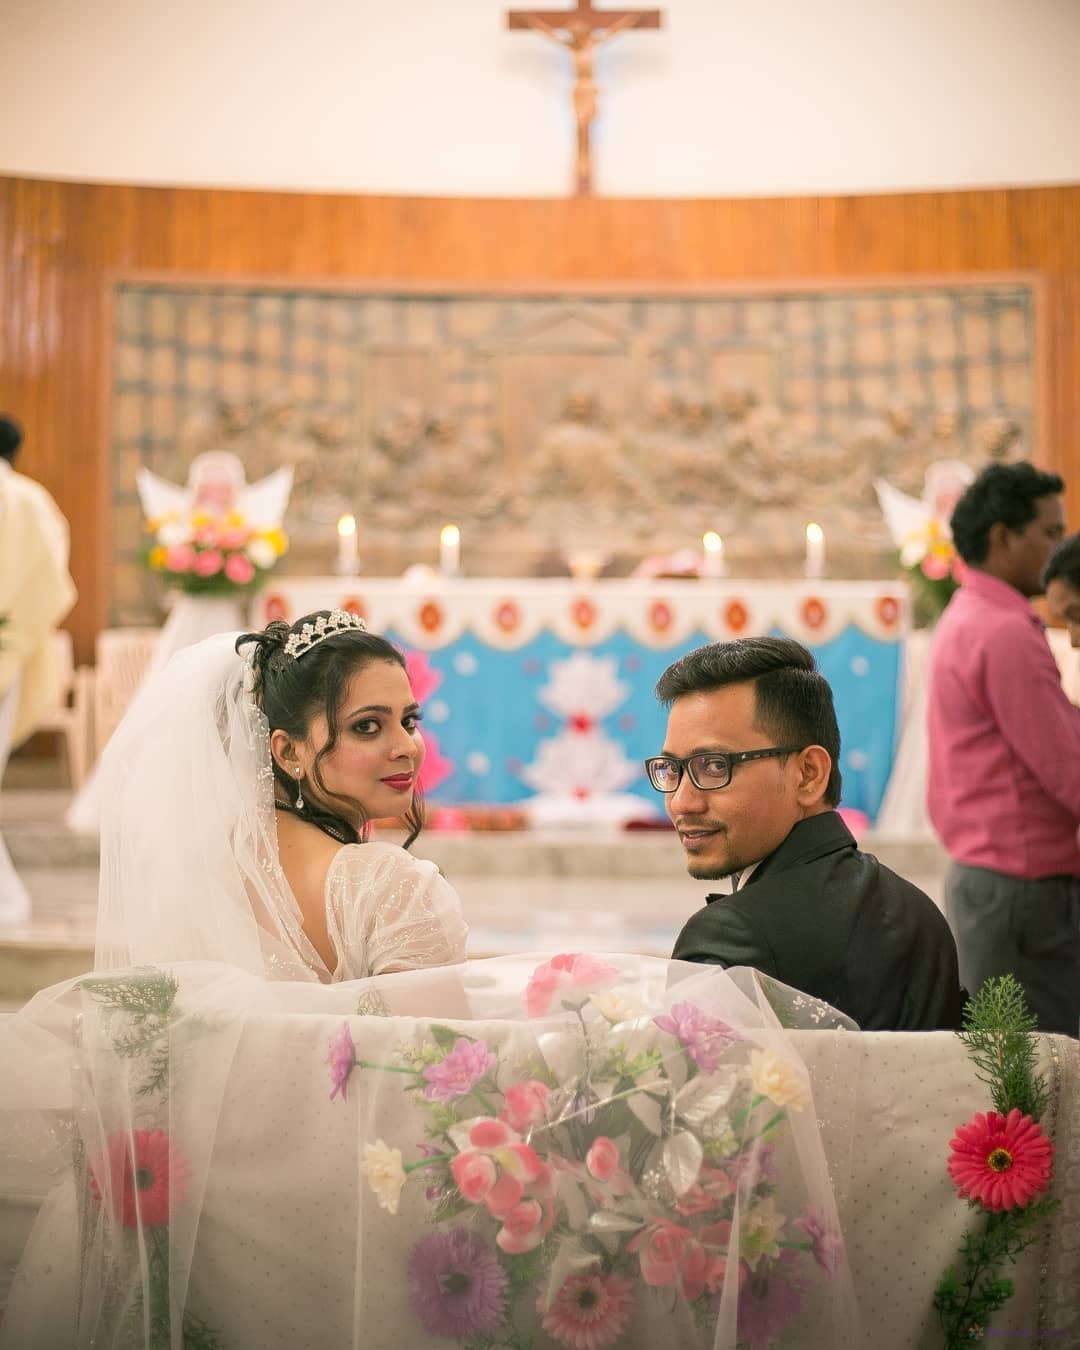 Weddinbay Wedding Photographer, Delhi NCR